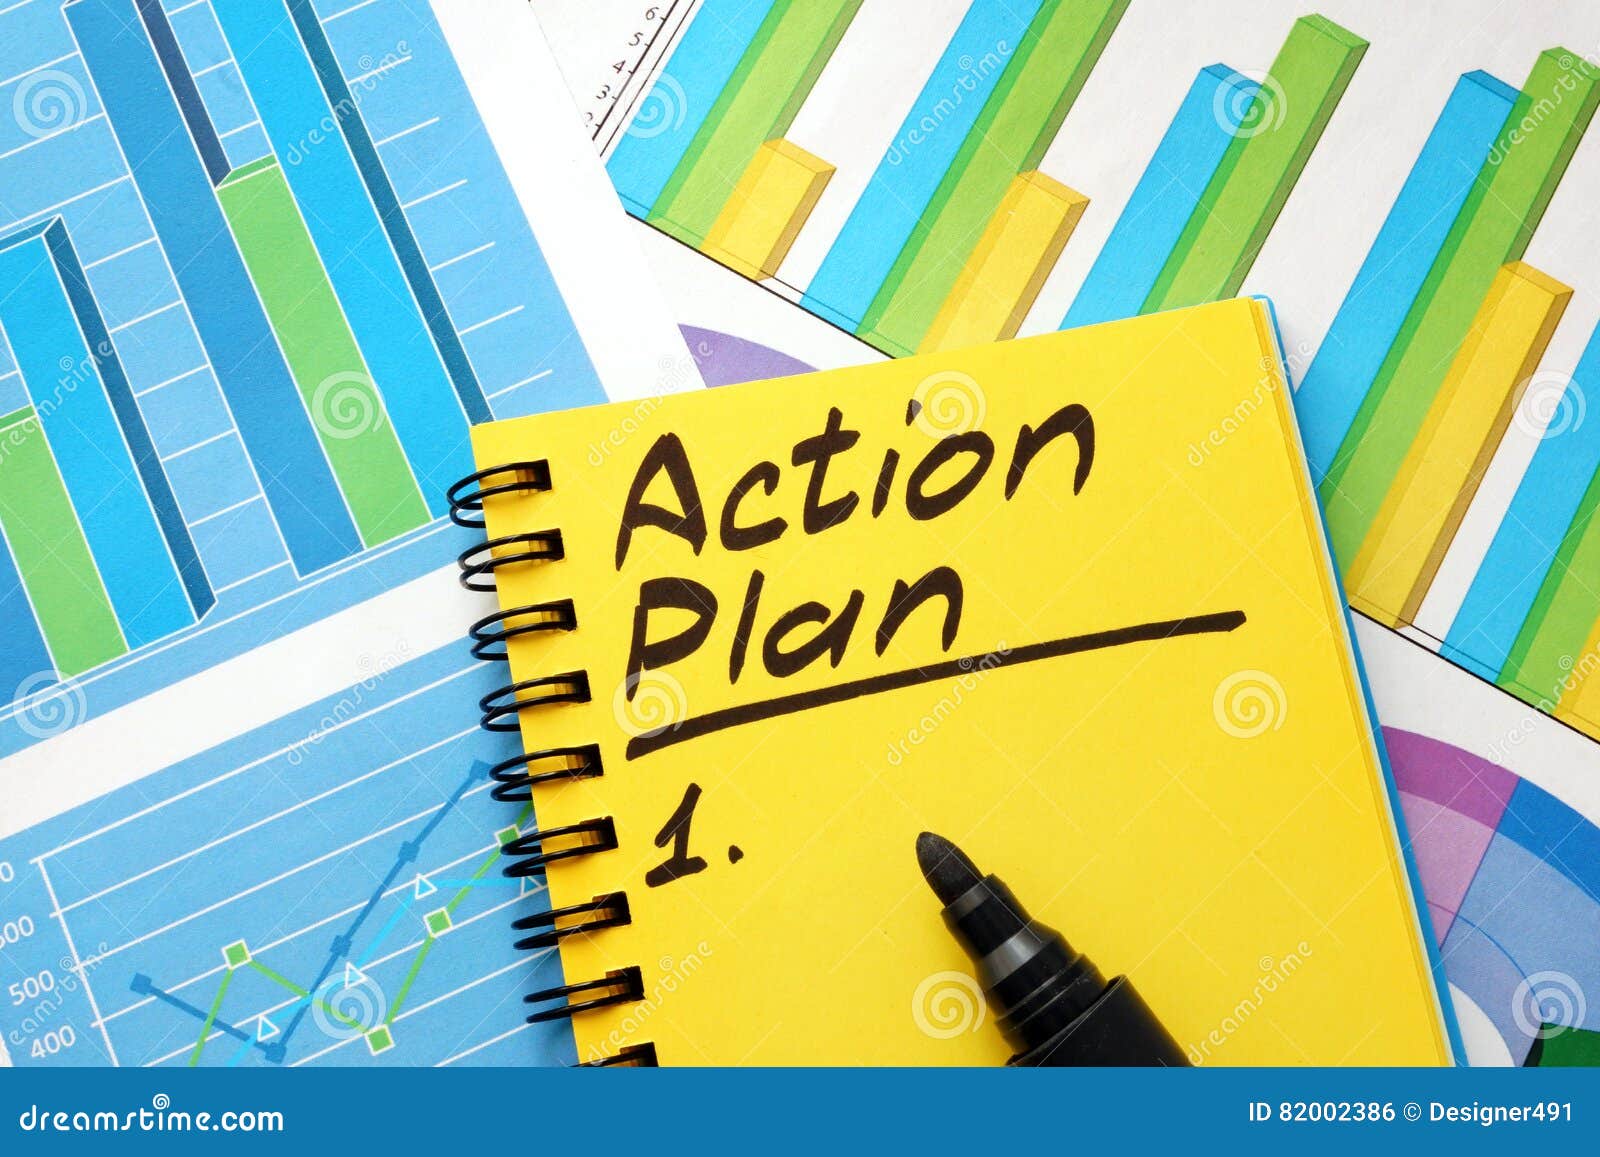 action plan list